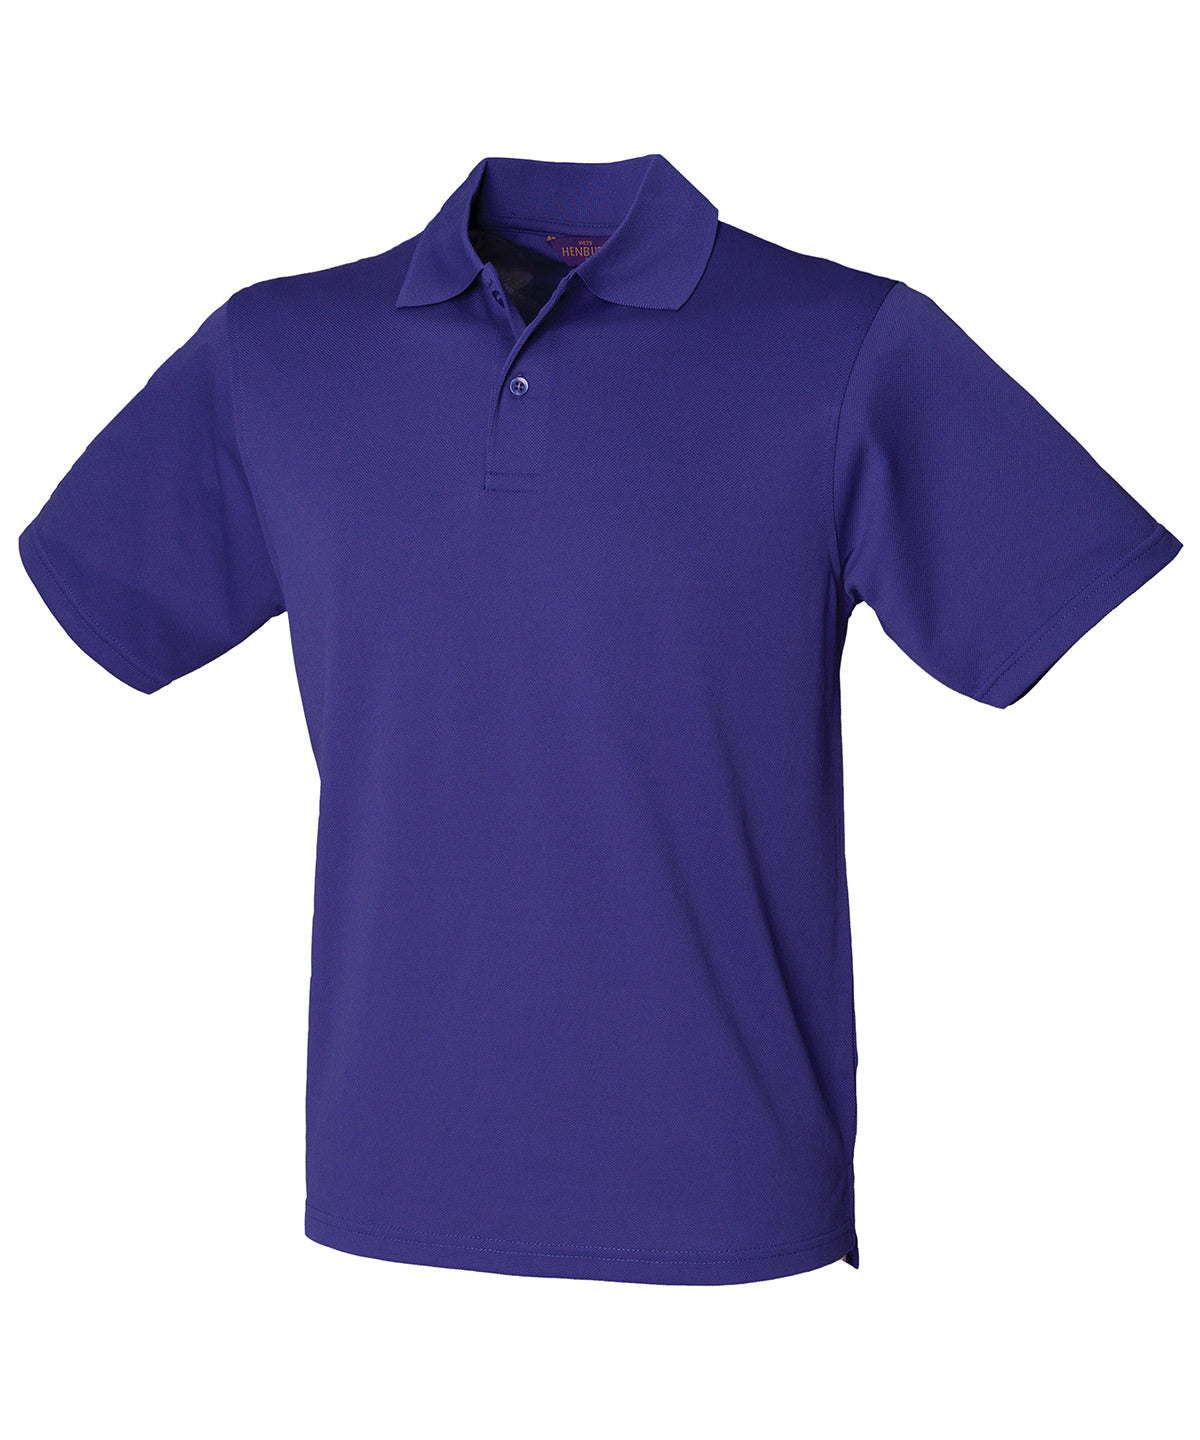 Personalised Polo Shirts - Teal Henbury Coolplus® polo shirt